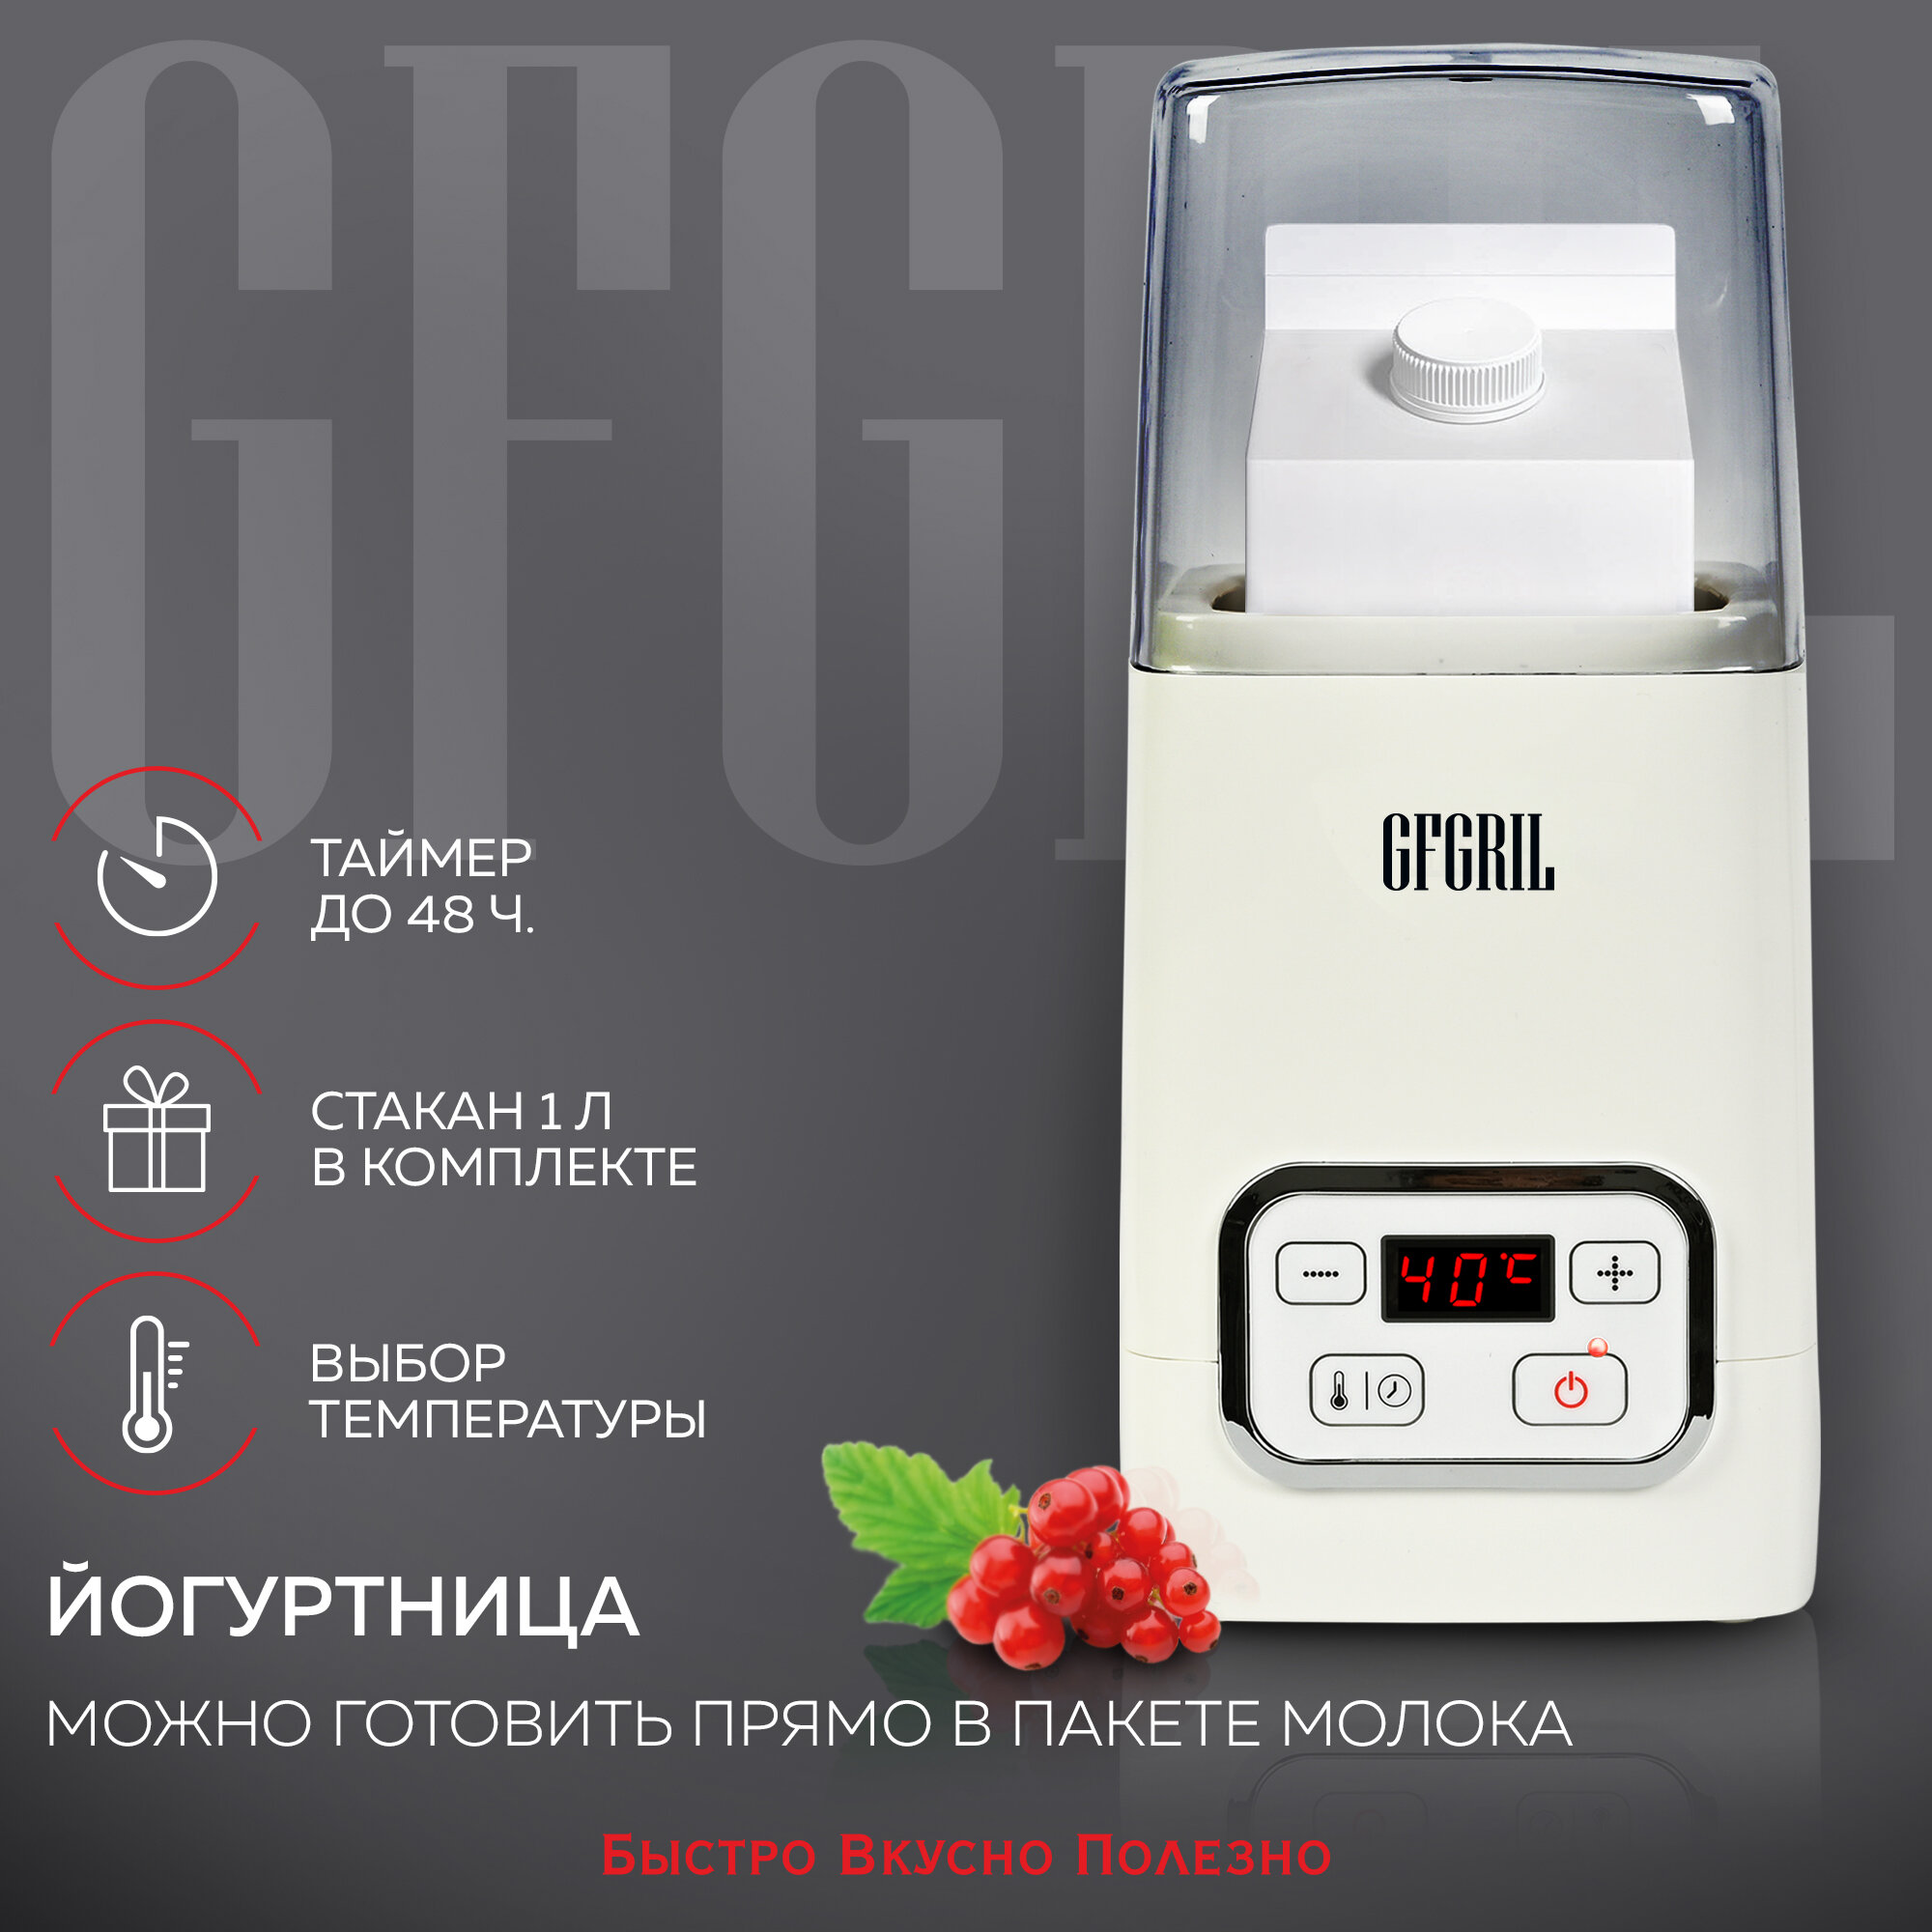 GFGRIL Йогуртница GF-YM300 на 1 л регулировка времени и температуры